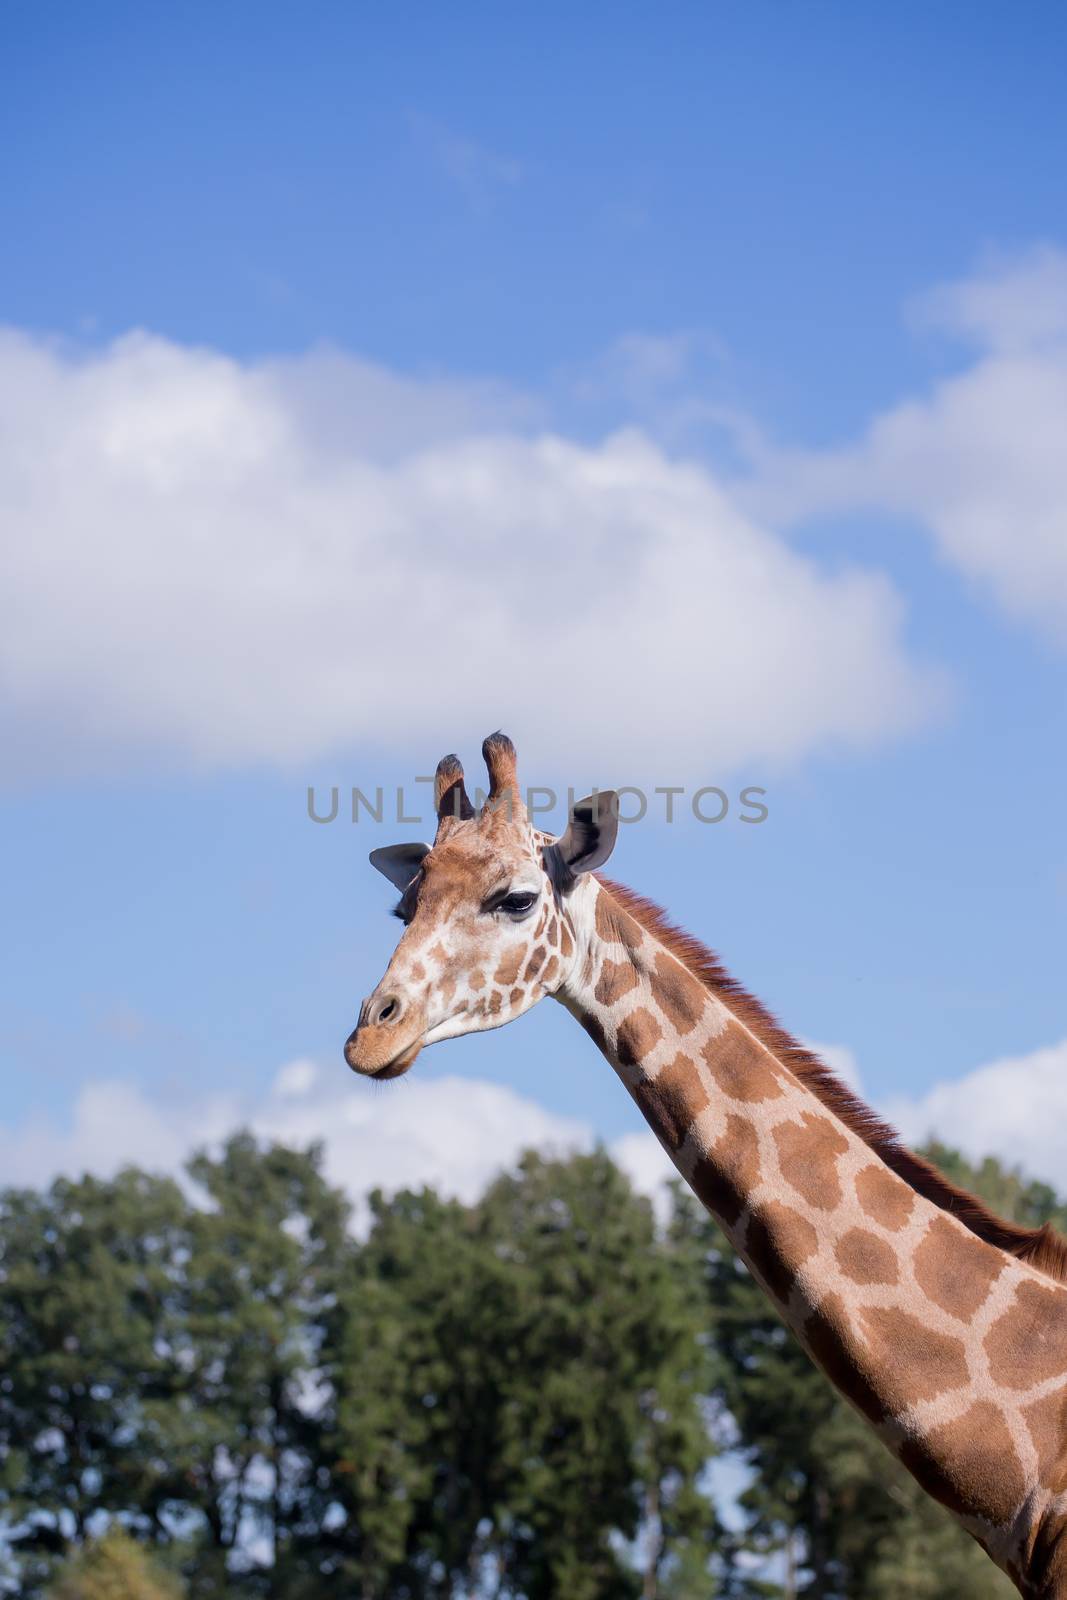 The head of a giraffe against a blue sky by sandra_fotodesign